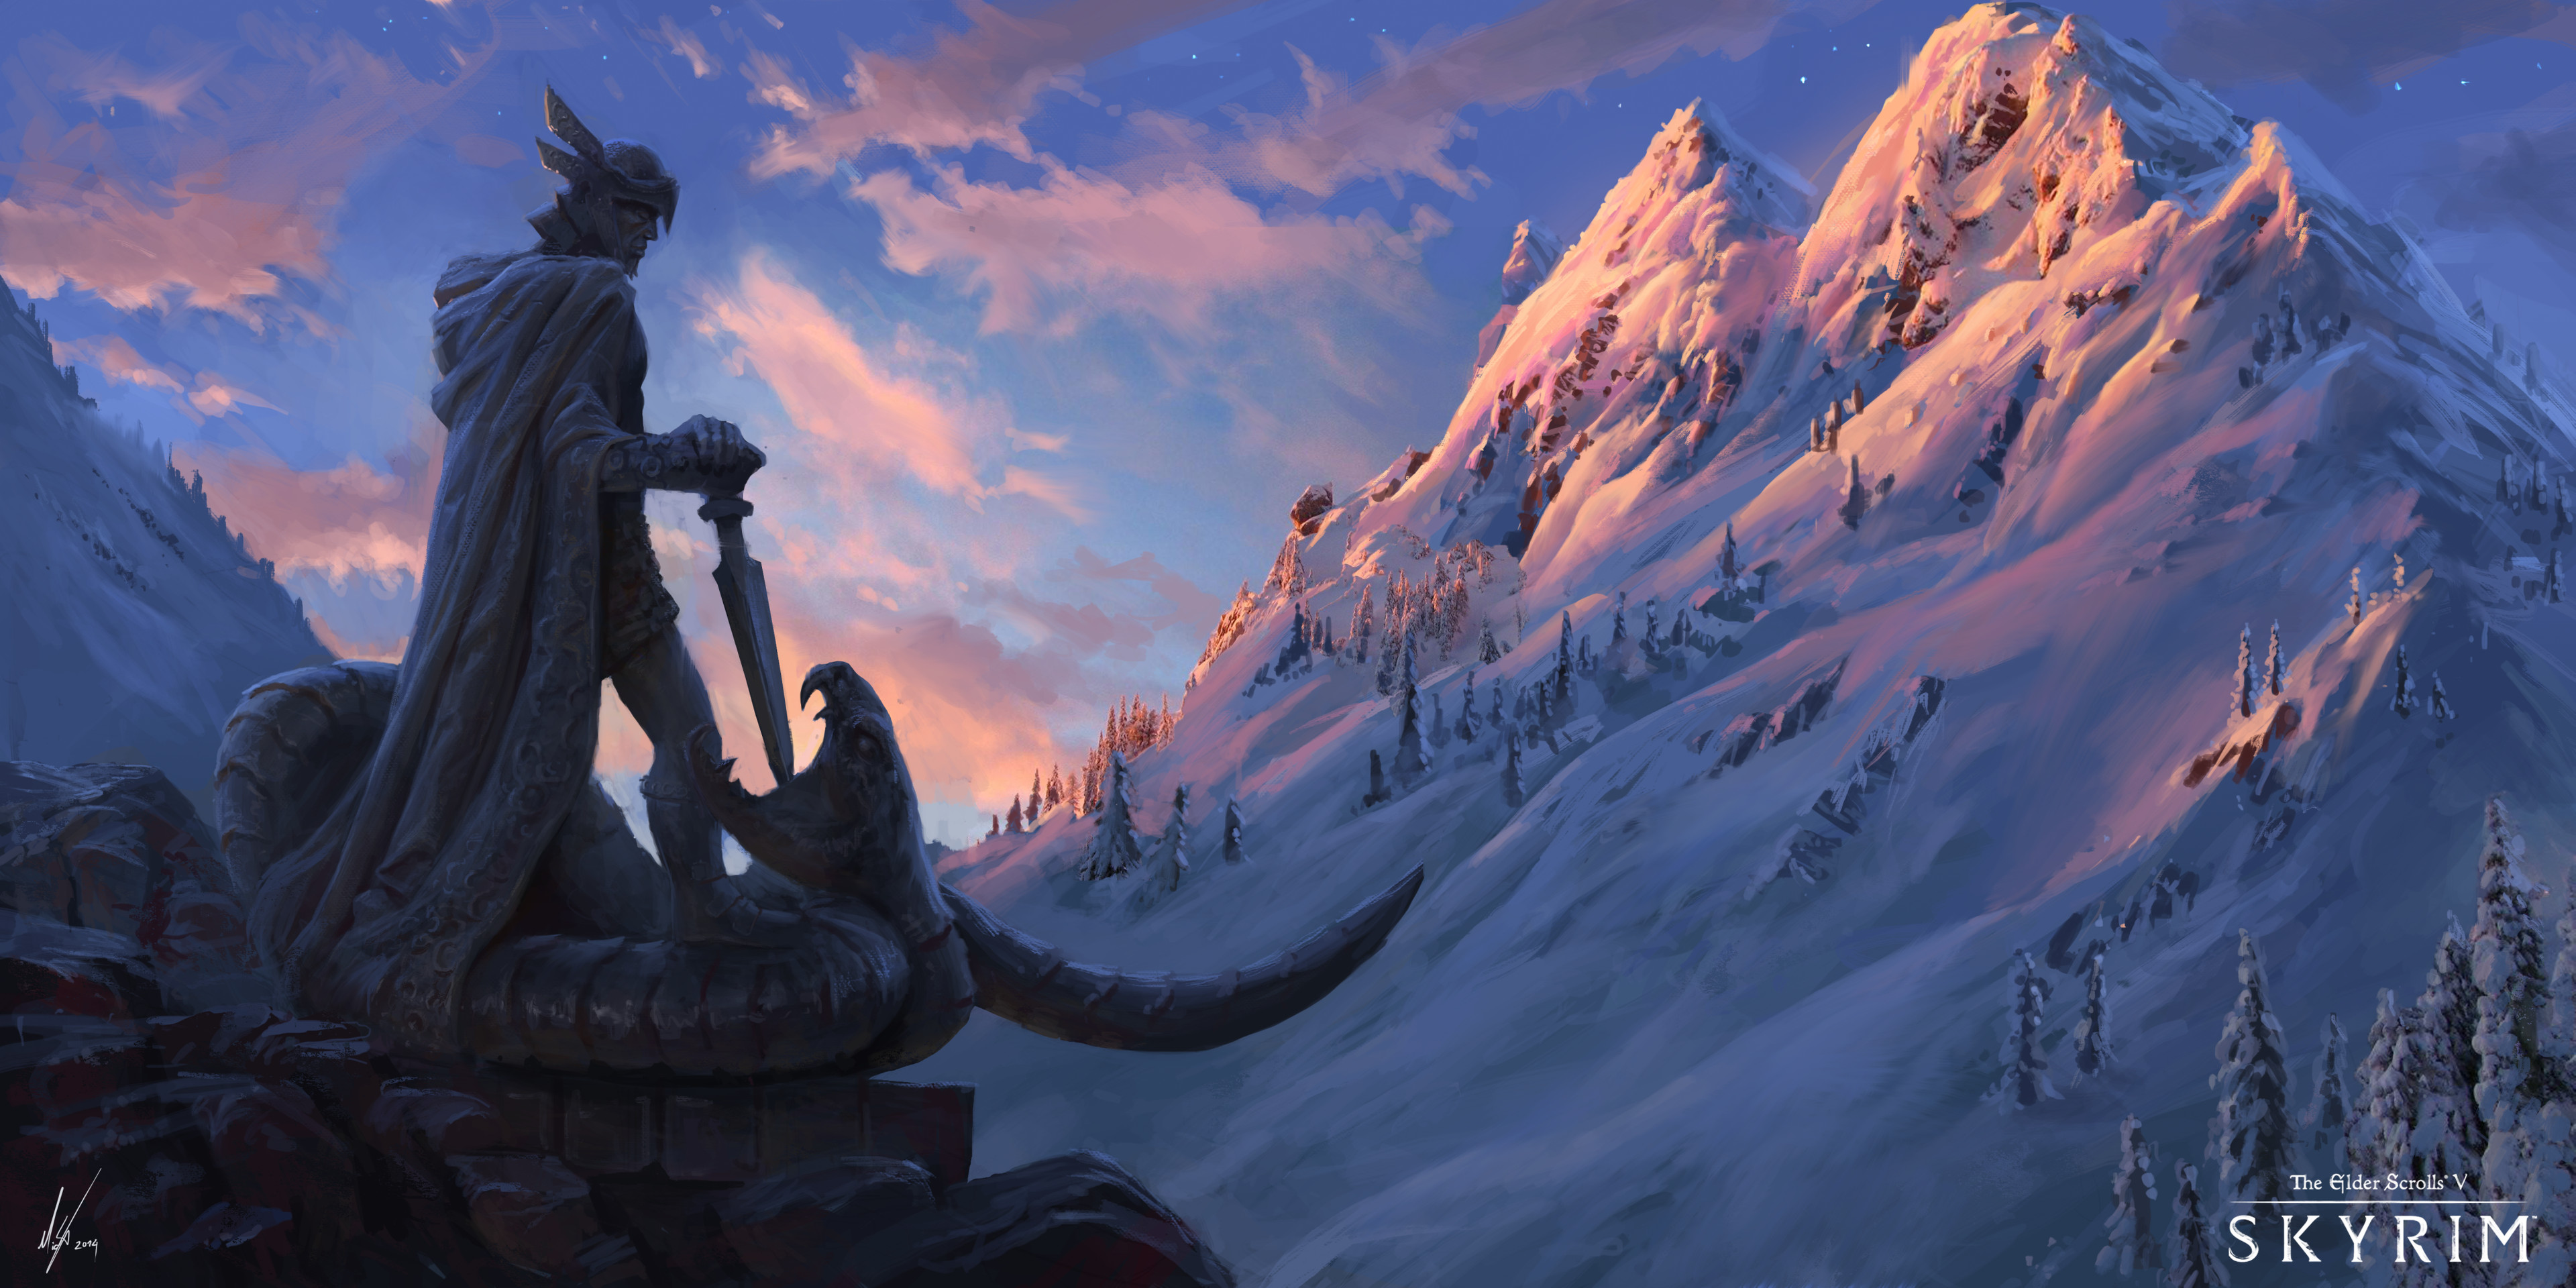 General 3840x1920 The Elder Scrolls V: Skyrim snow covered mountains digital art digital painting fan art artwork video game art landscape Talos